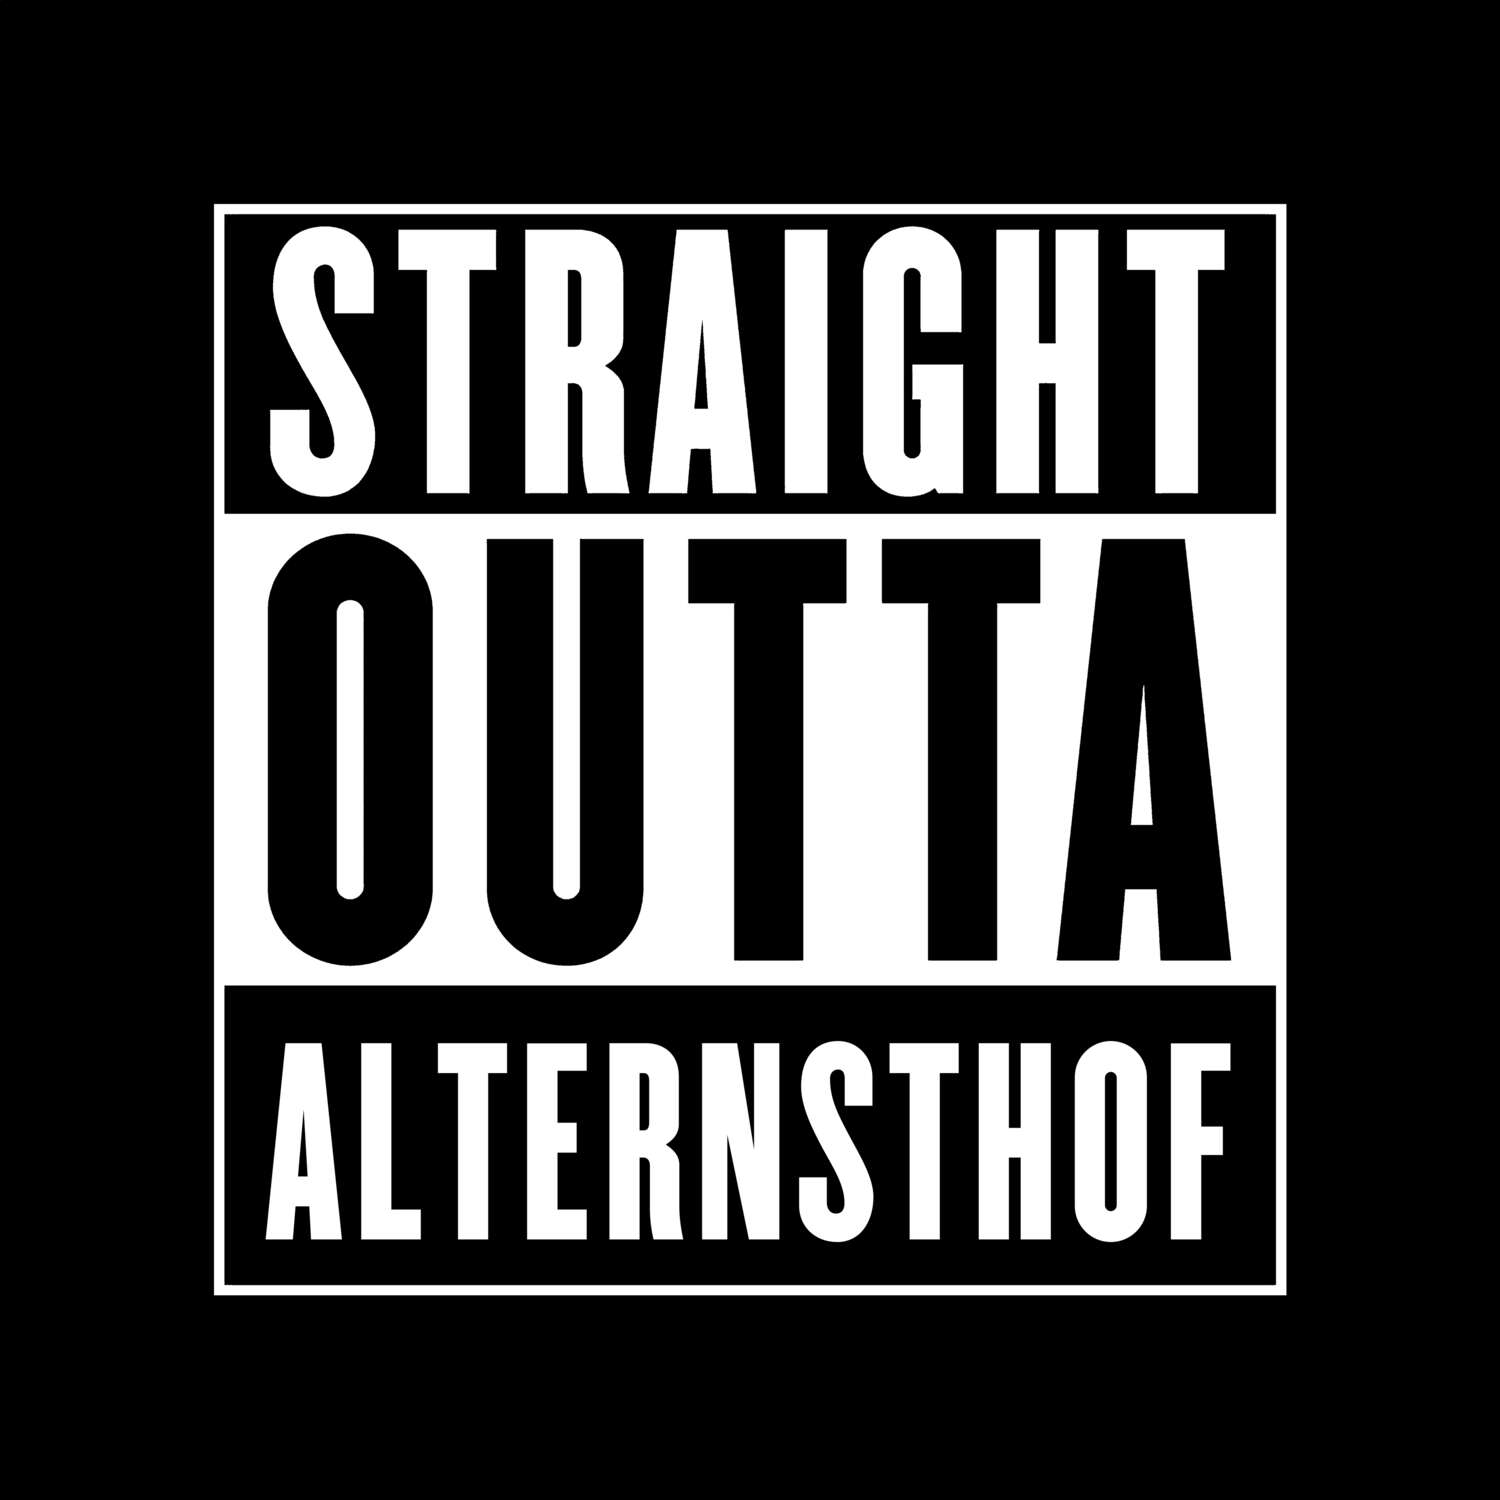 Alternsthof T-Shirt »Straight Outta«